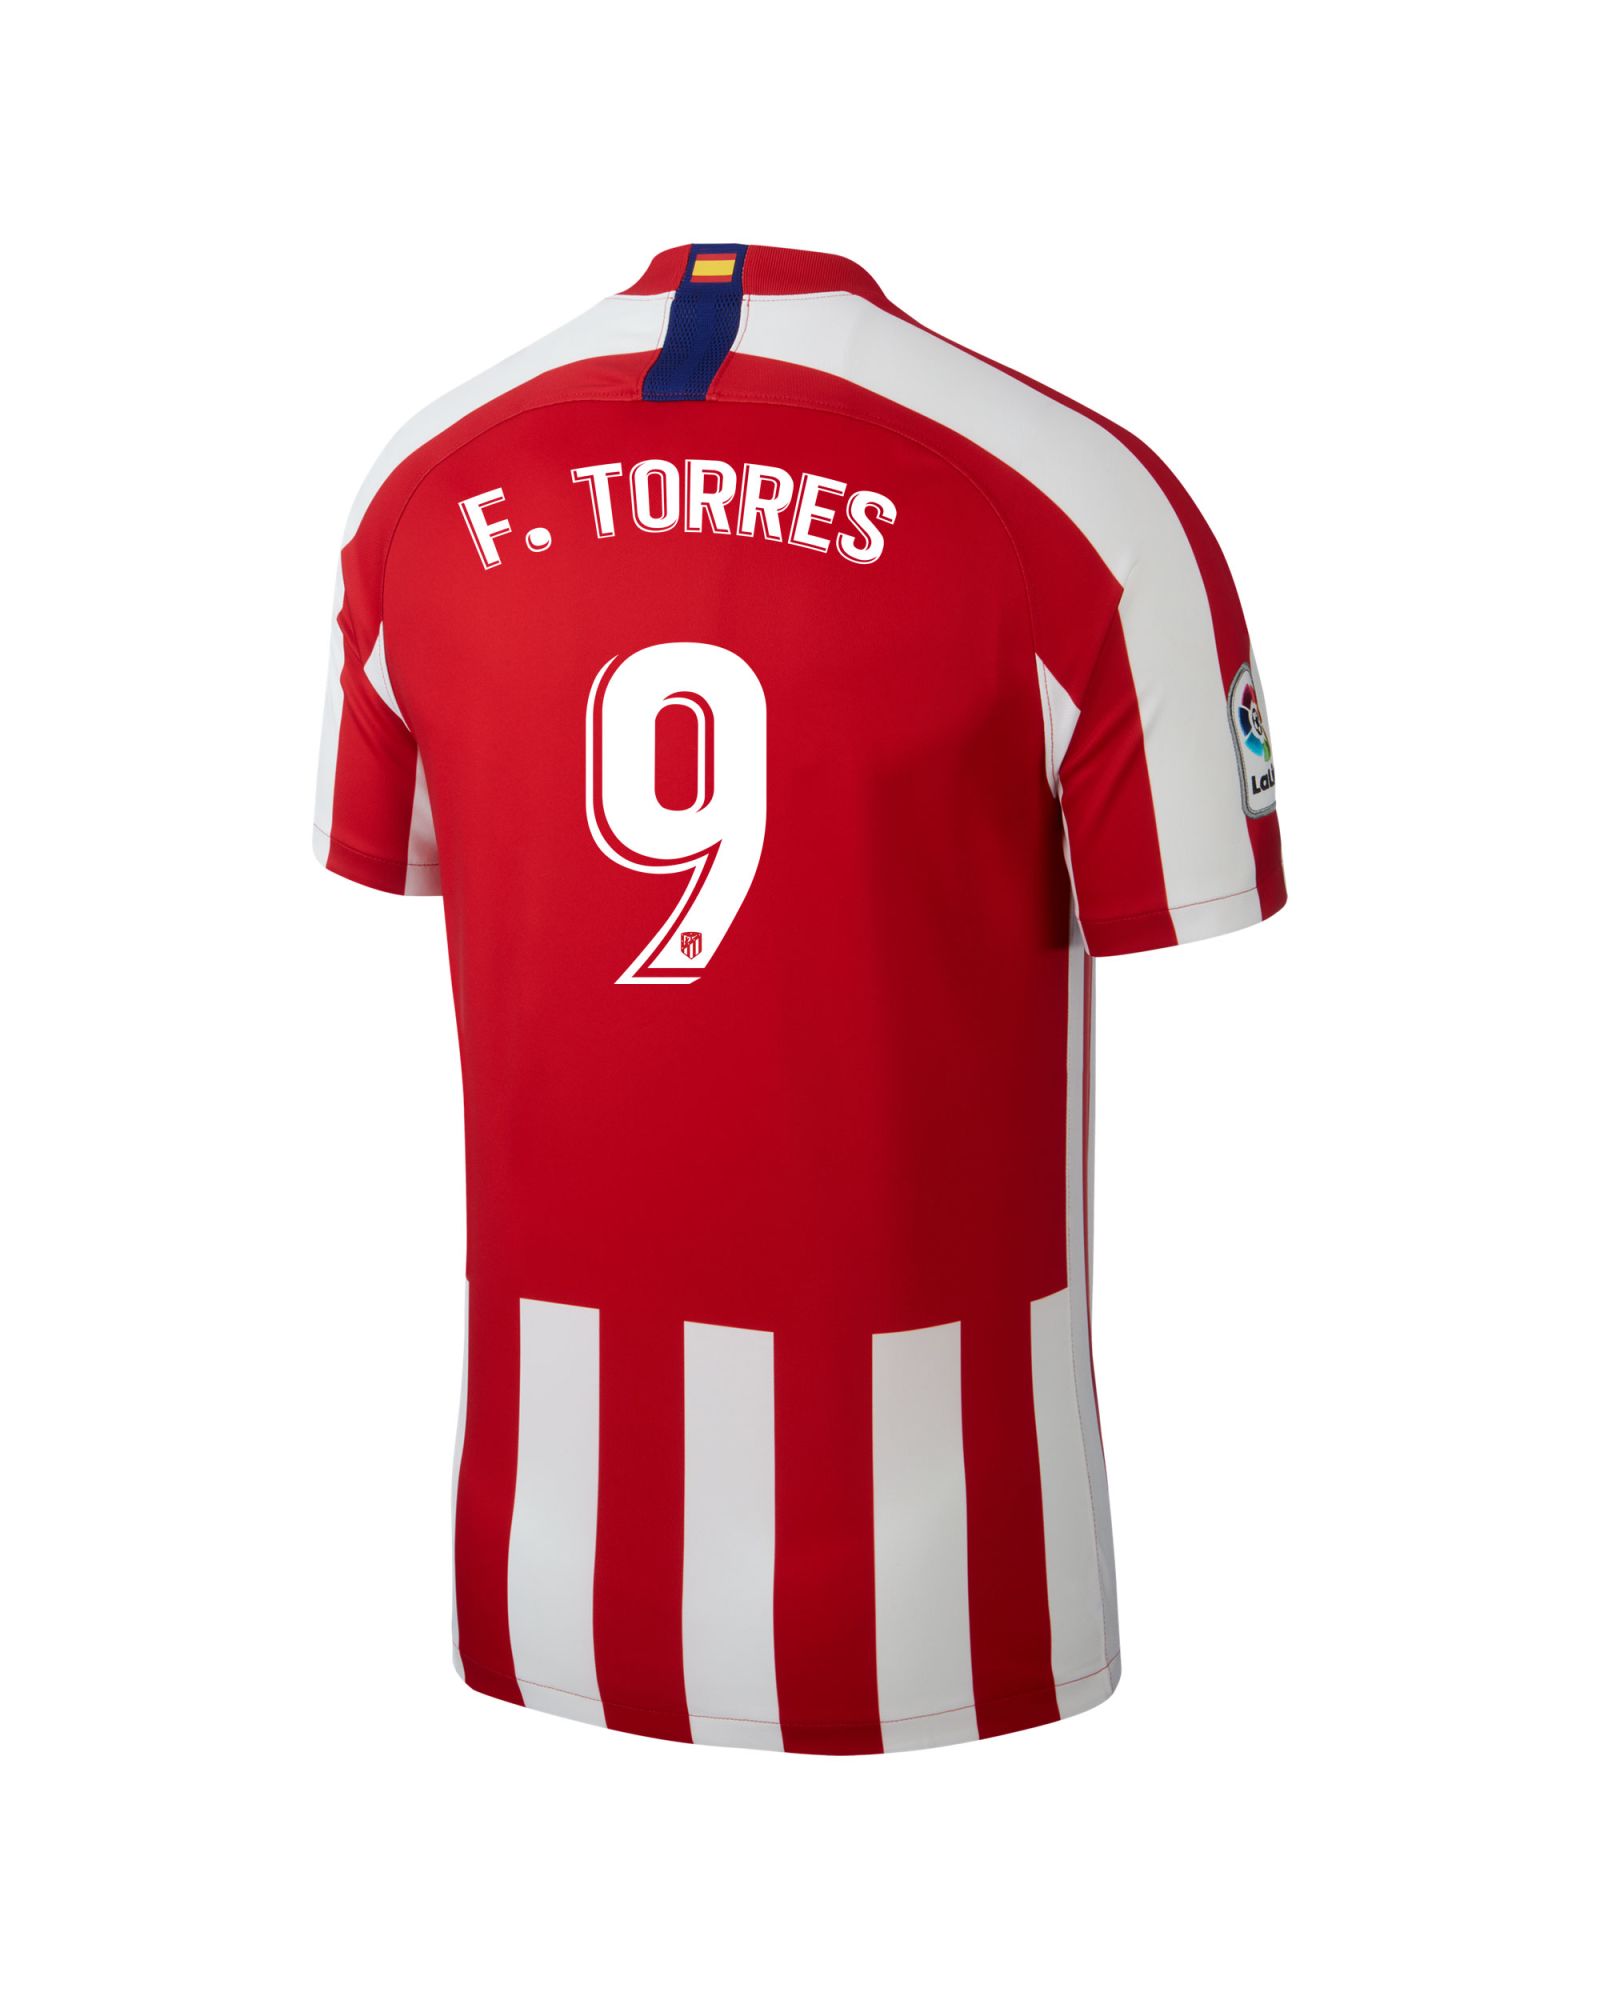 Camiseta 1ª Atlético de Madrid 2019/2020 F. Torres - Fútbol Factory